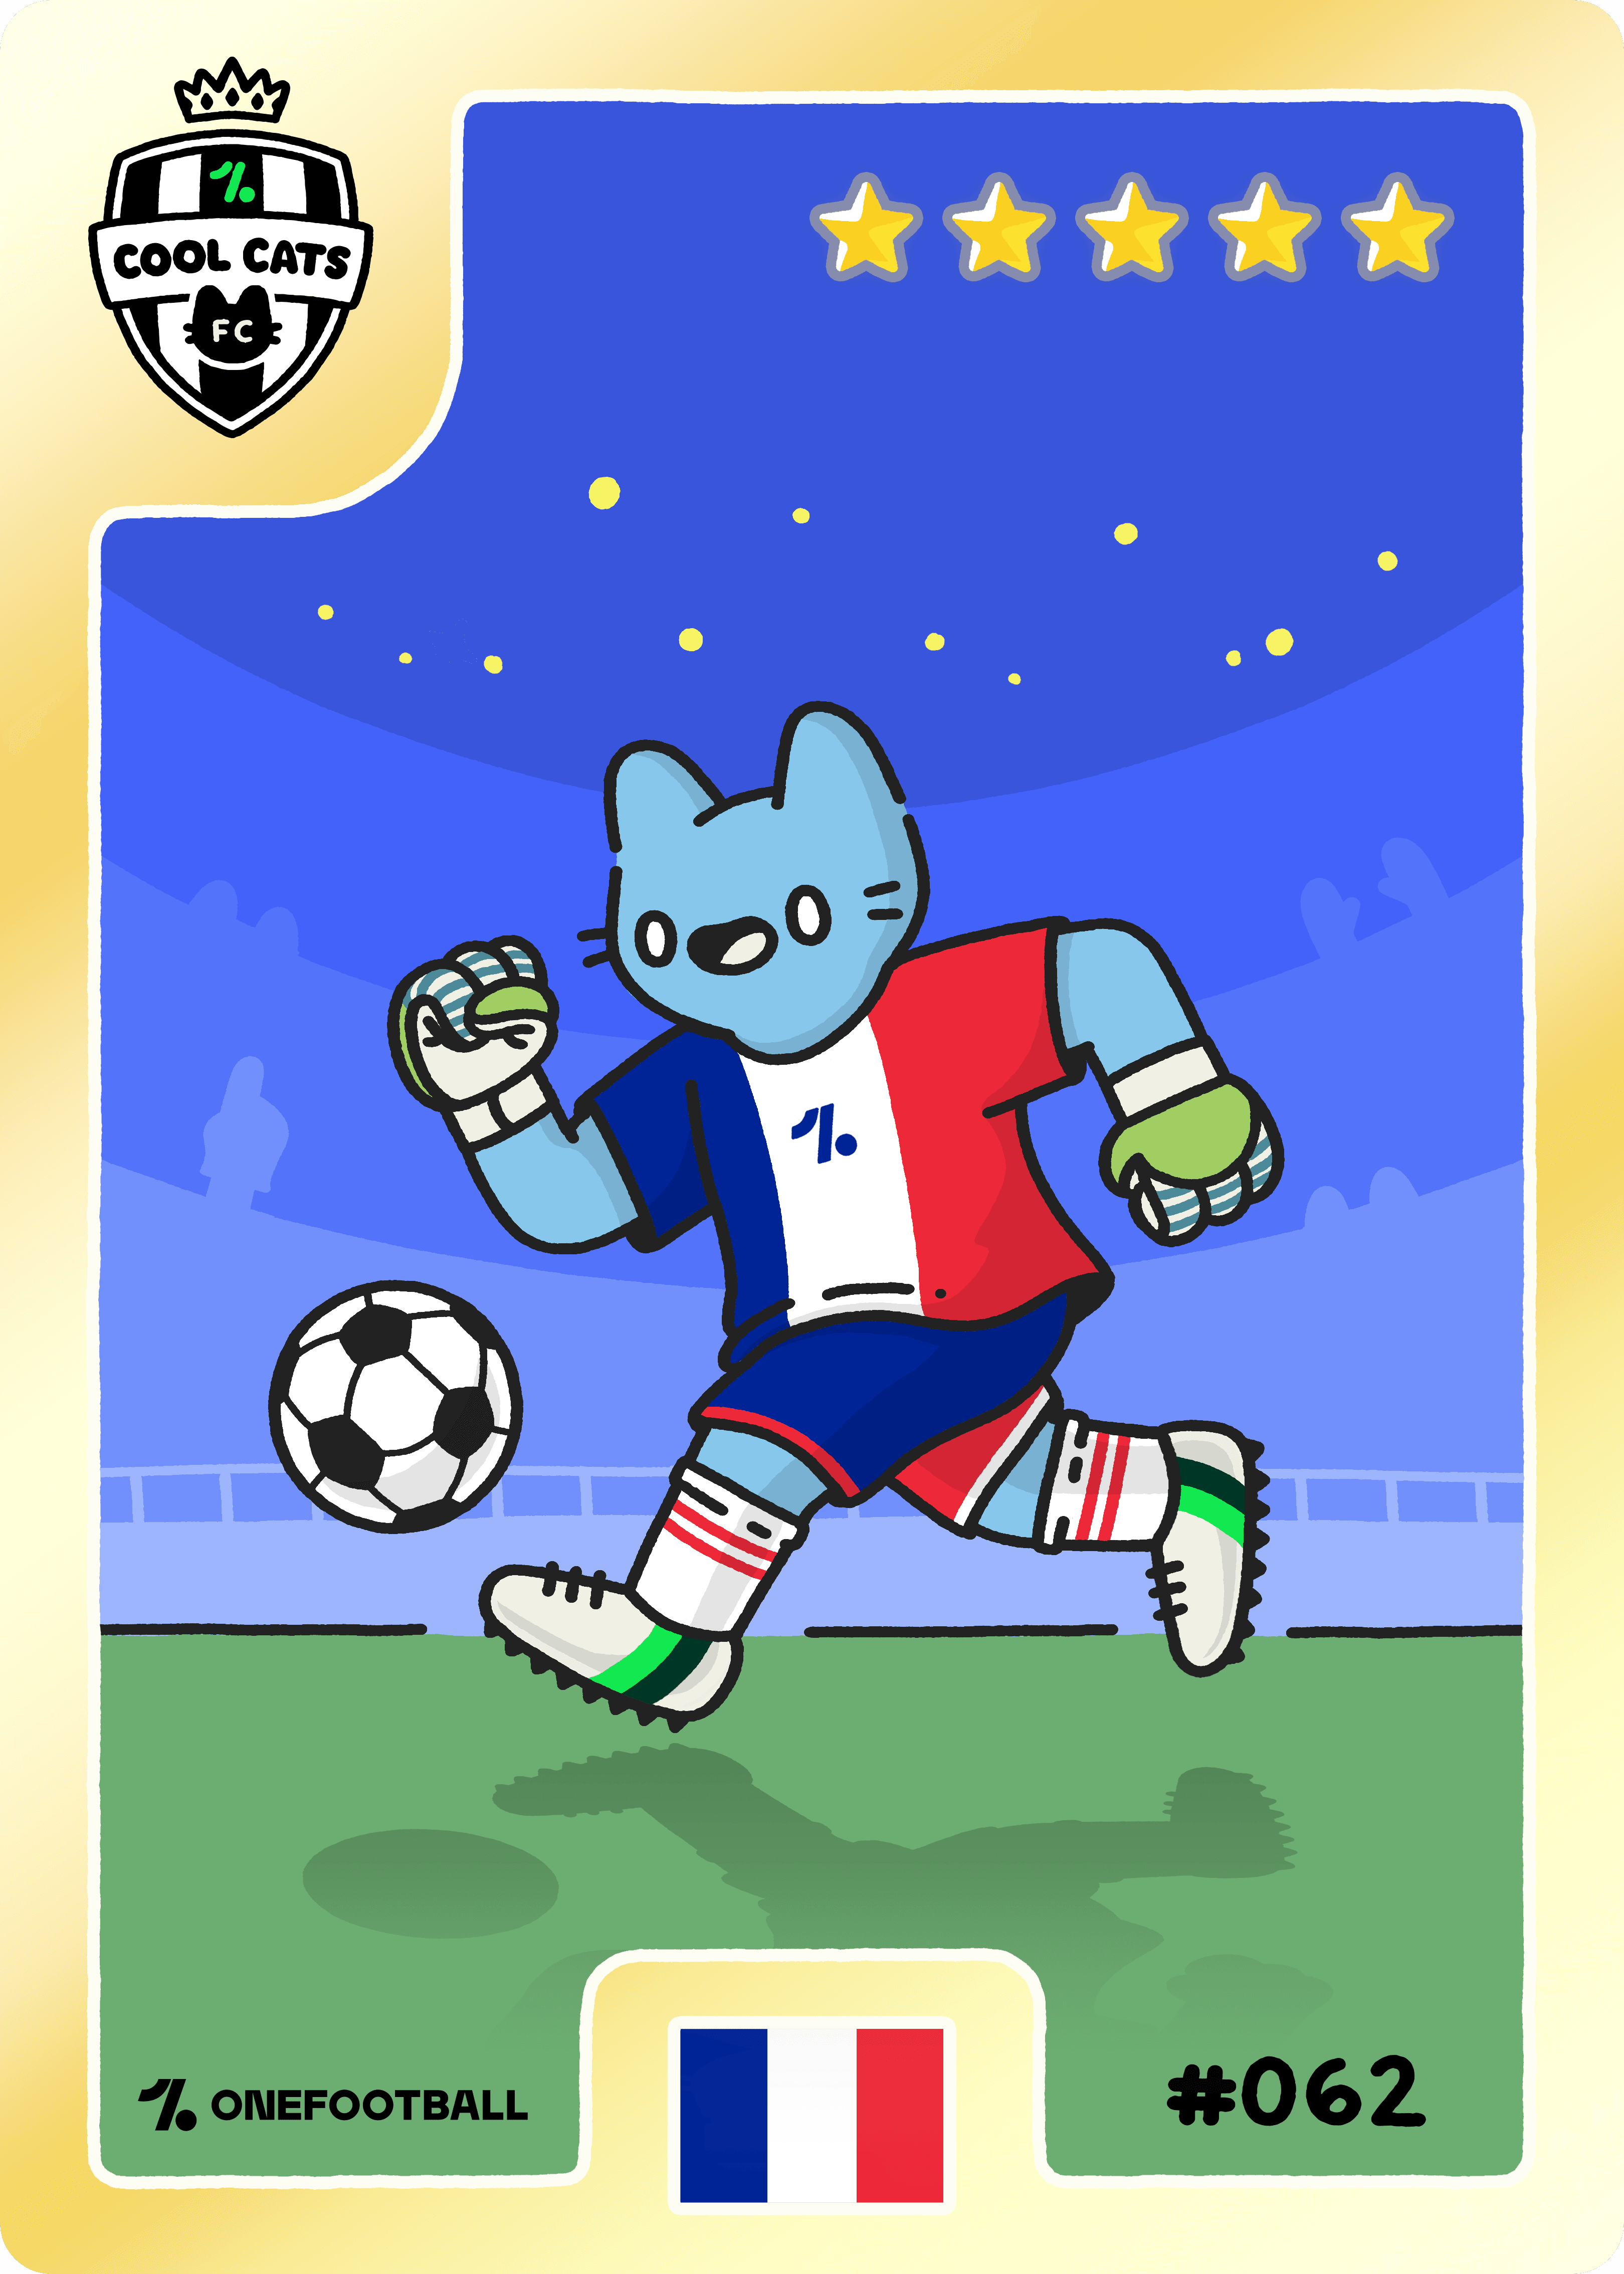 Cool Cats Football Club #610